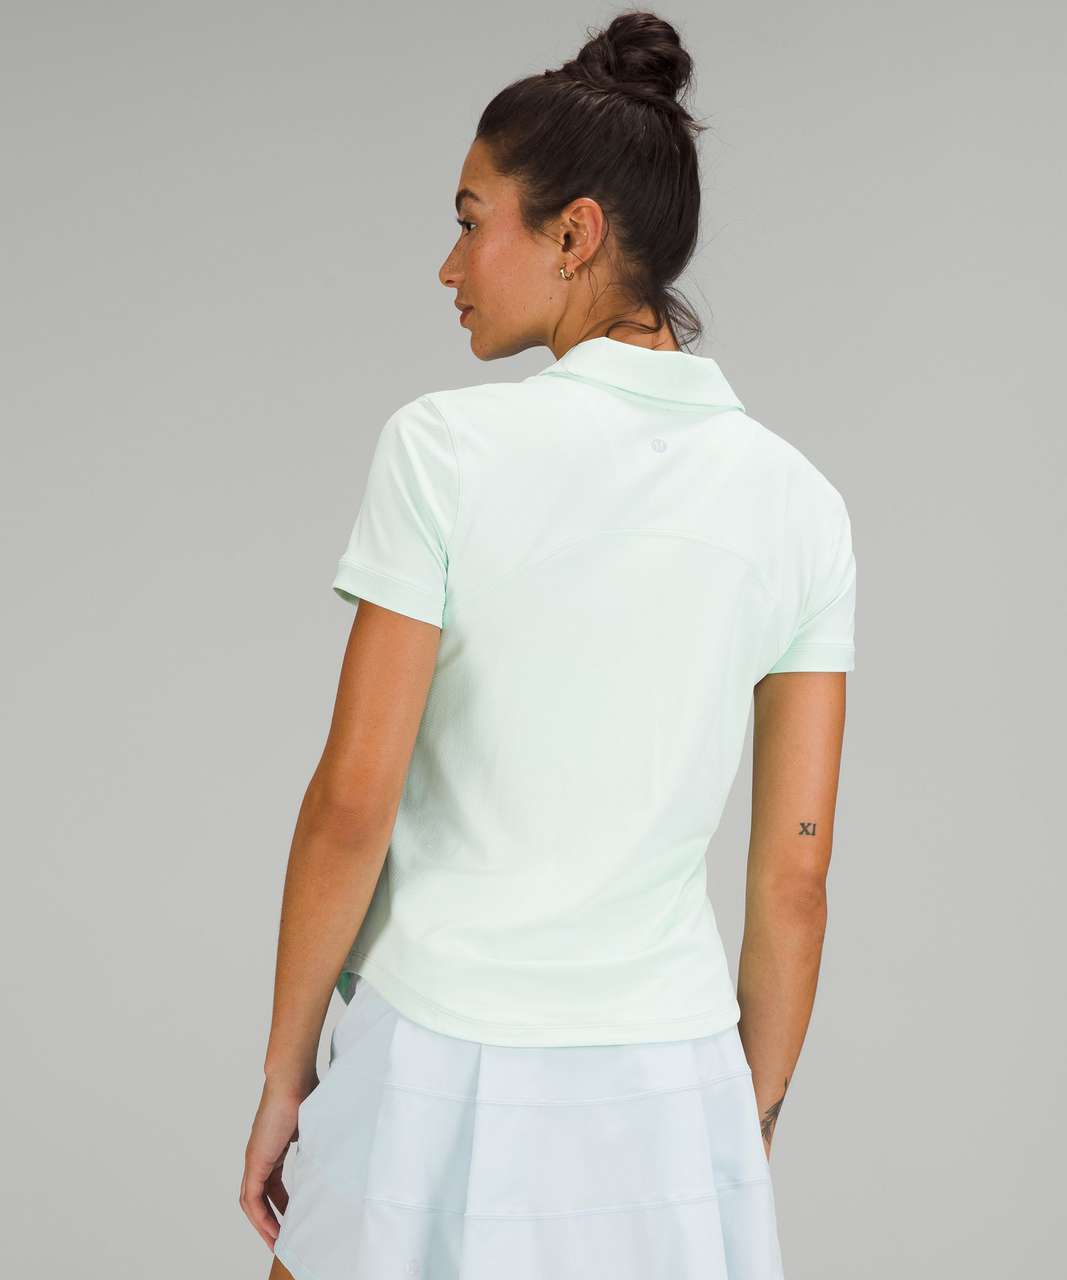 Lululemon Quick-Dry Short-Sleeve Polo Shirt - Mint Moment